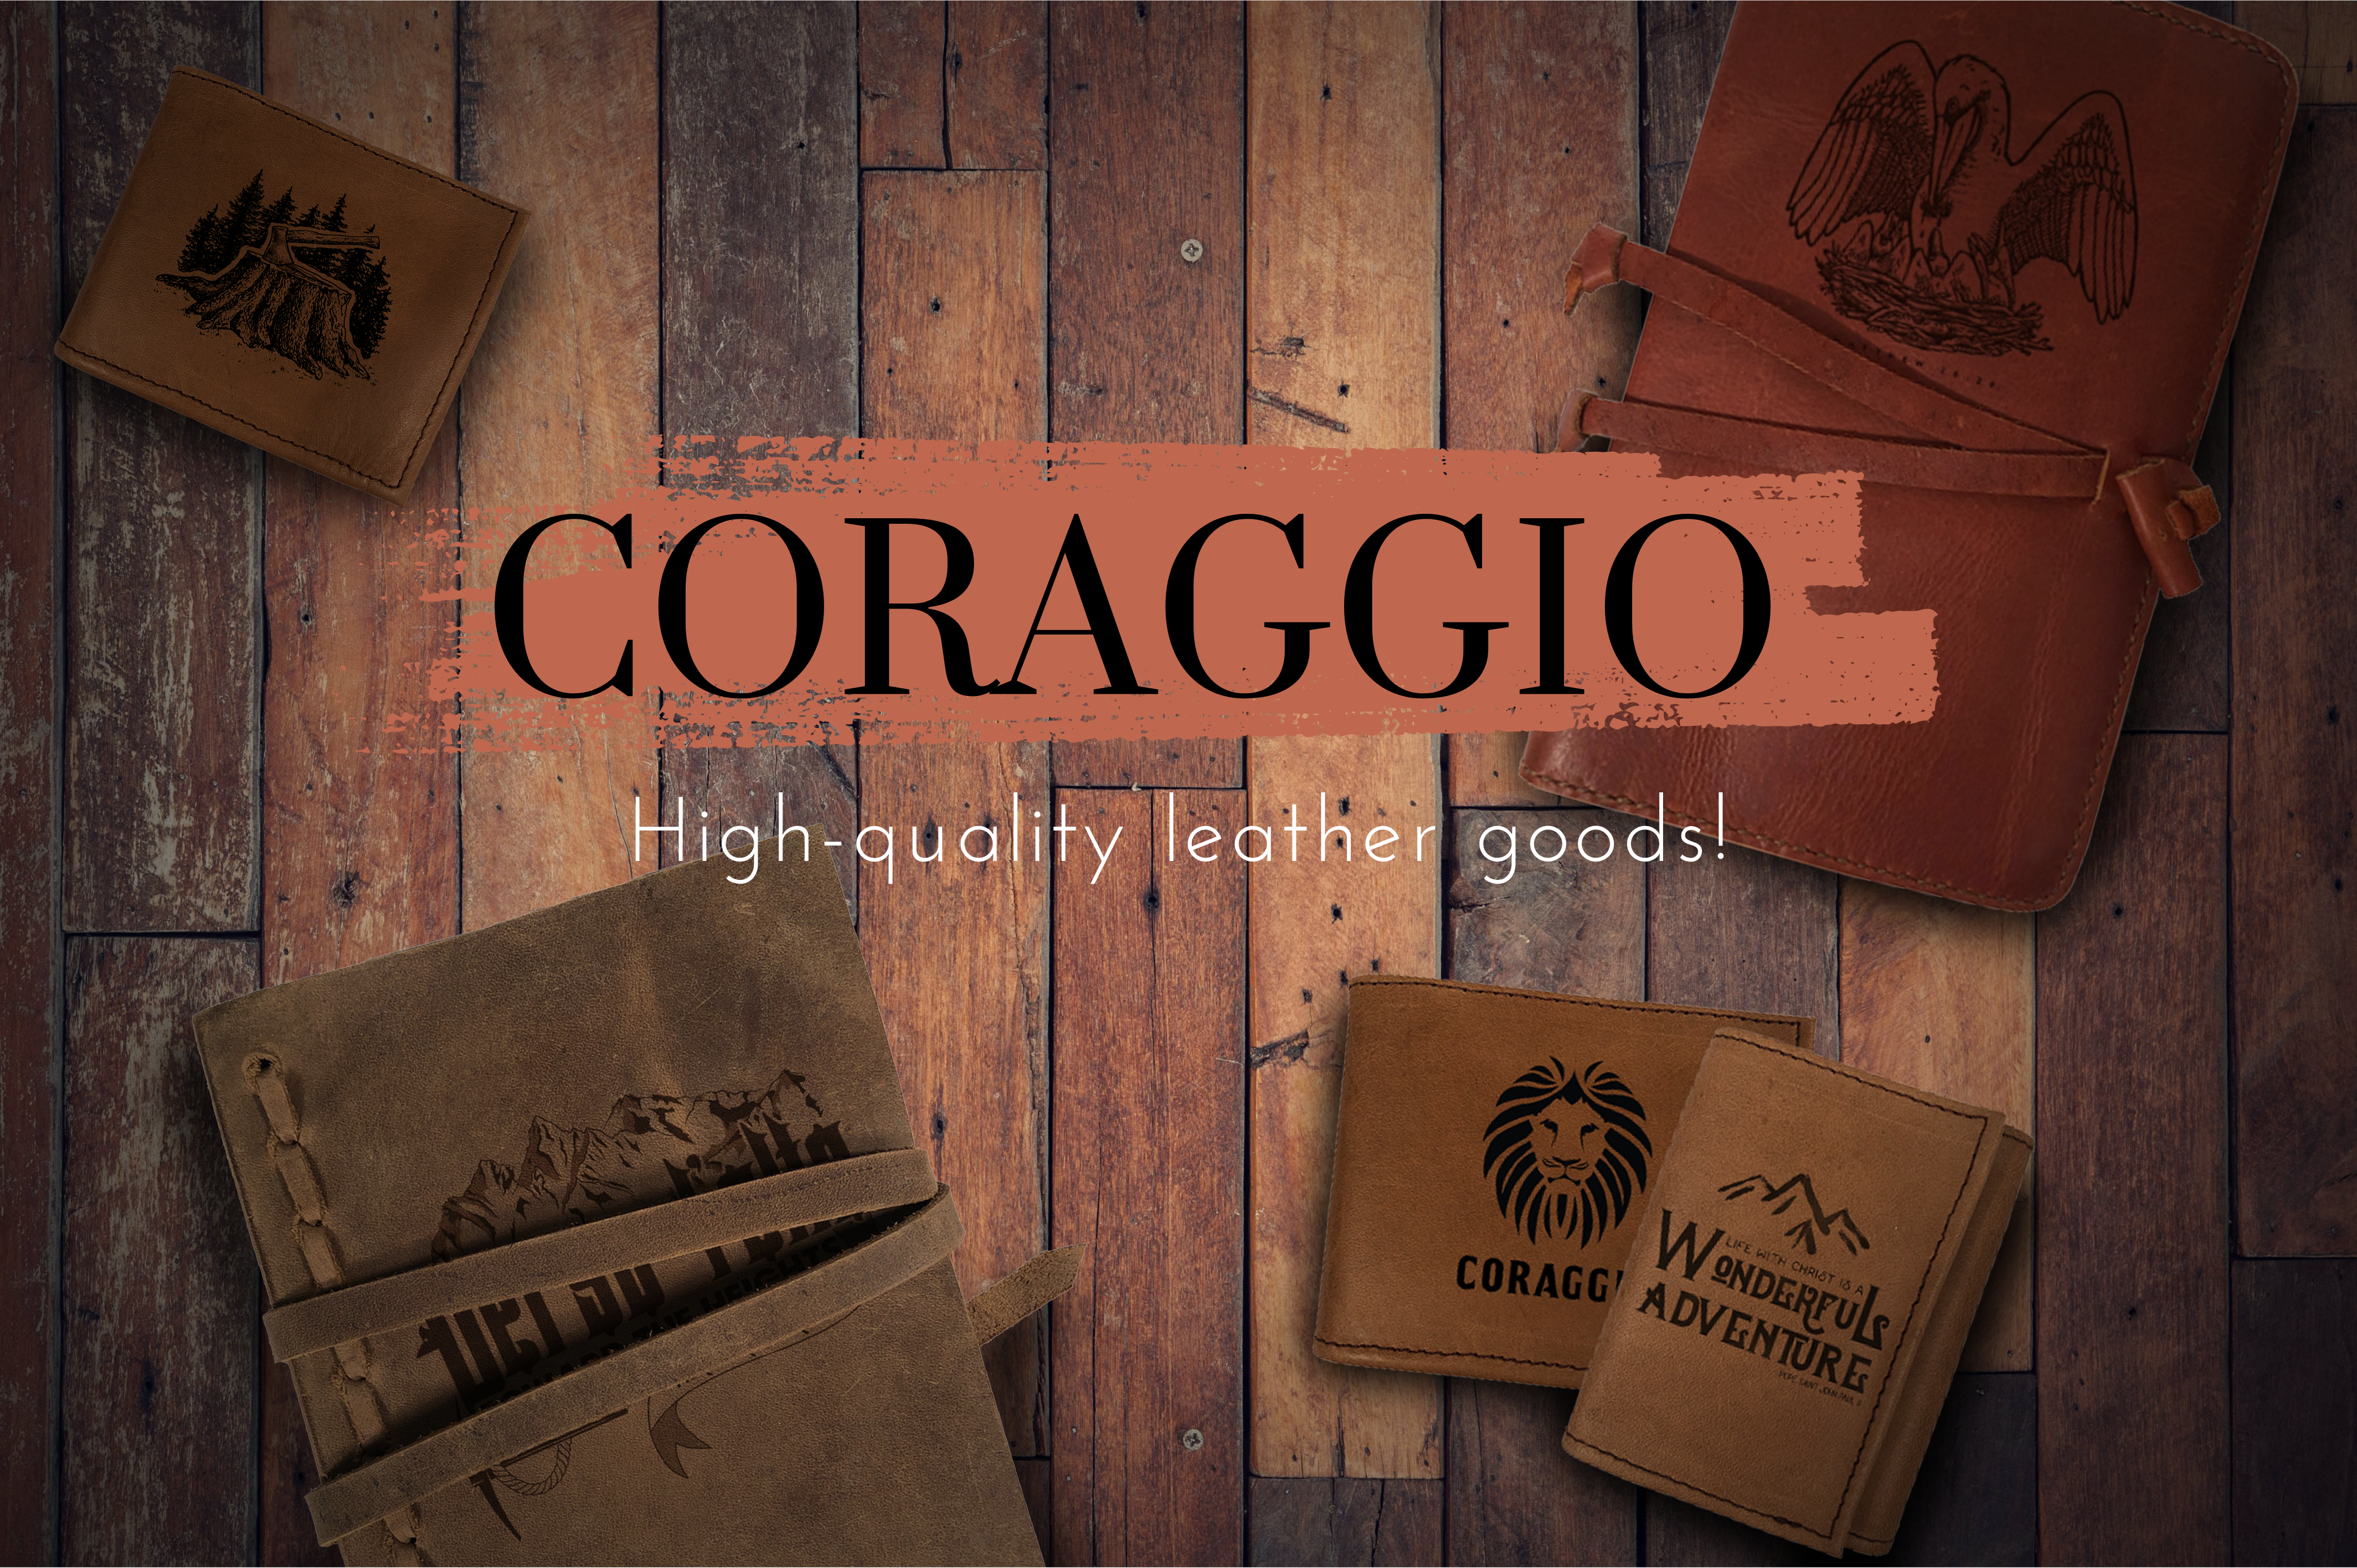 Coraggio; High-quality leather goods!